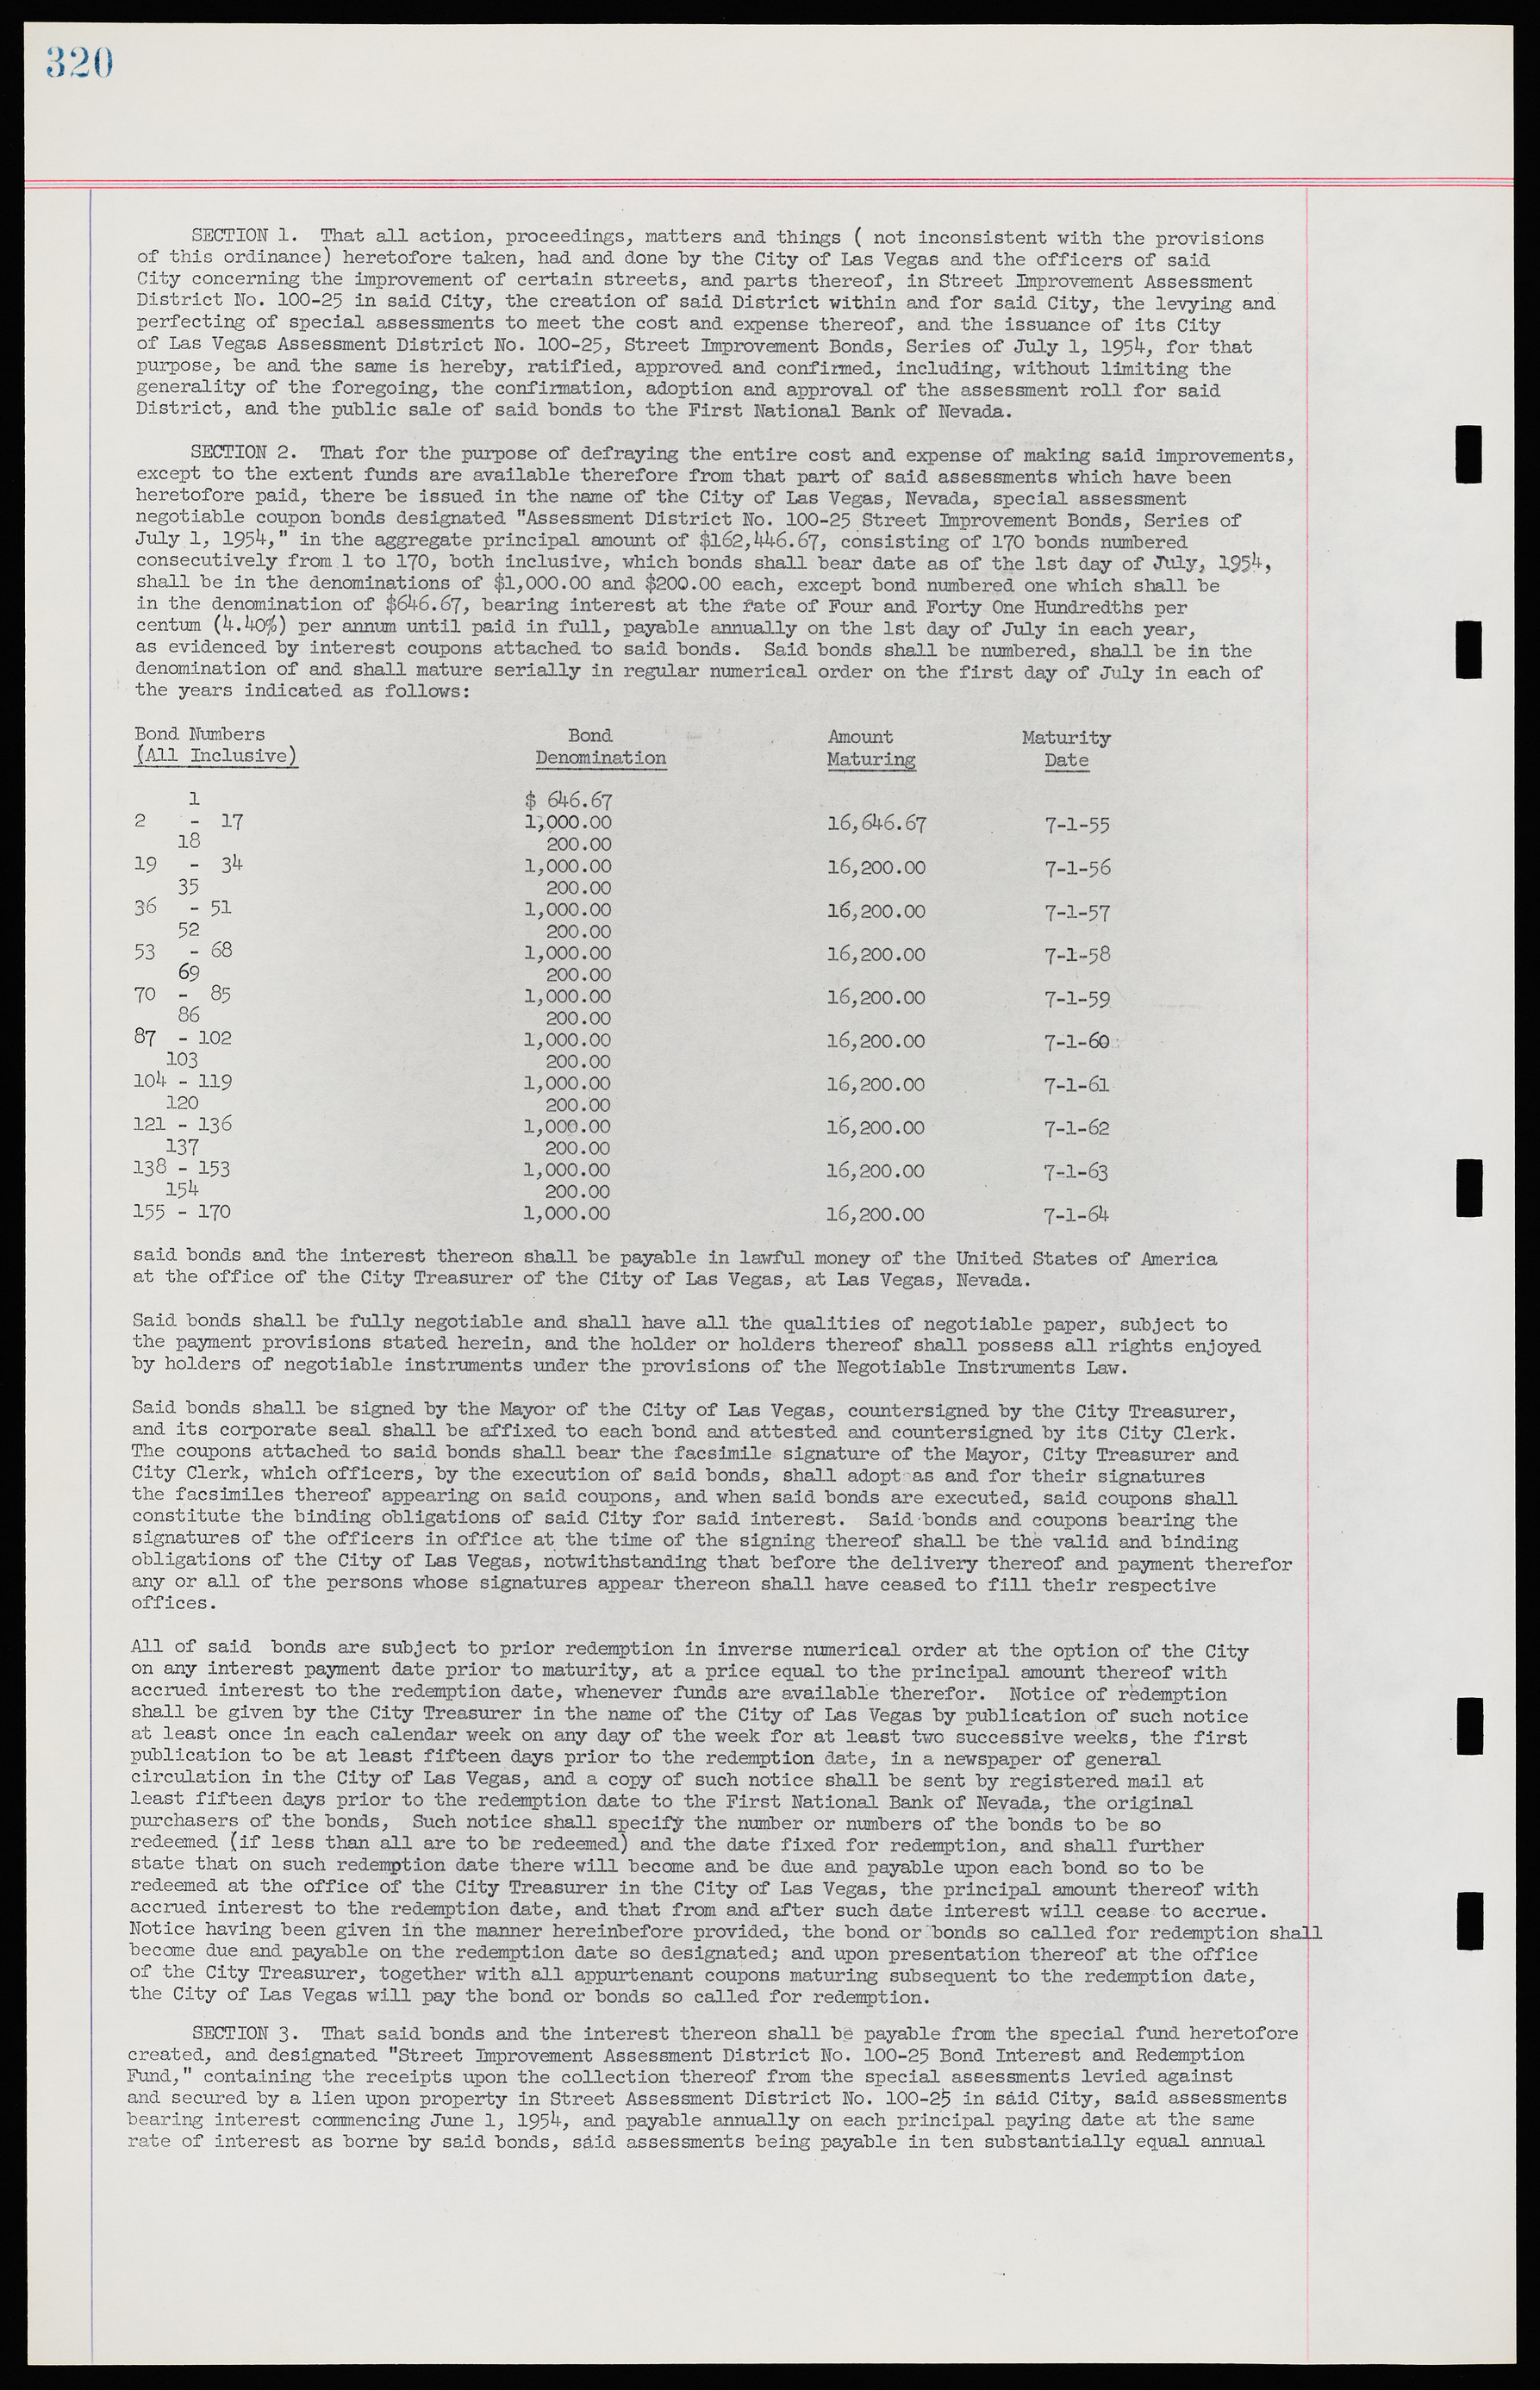 Las Vegas City Ordinances, November 13, 1950 to August 6, 1958, lvc000015-328